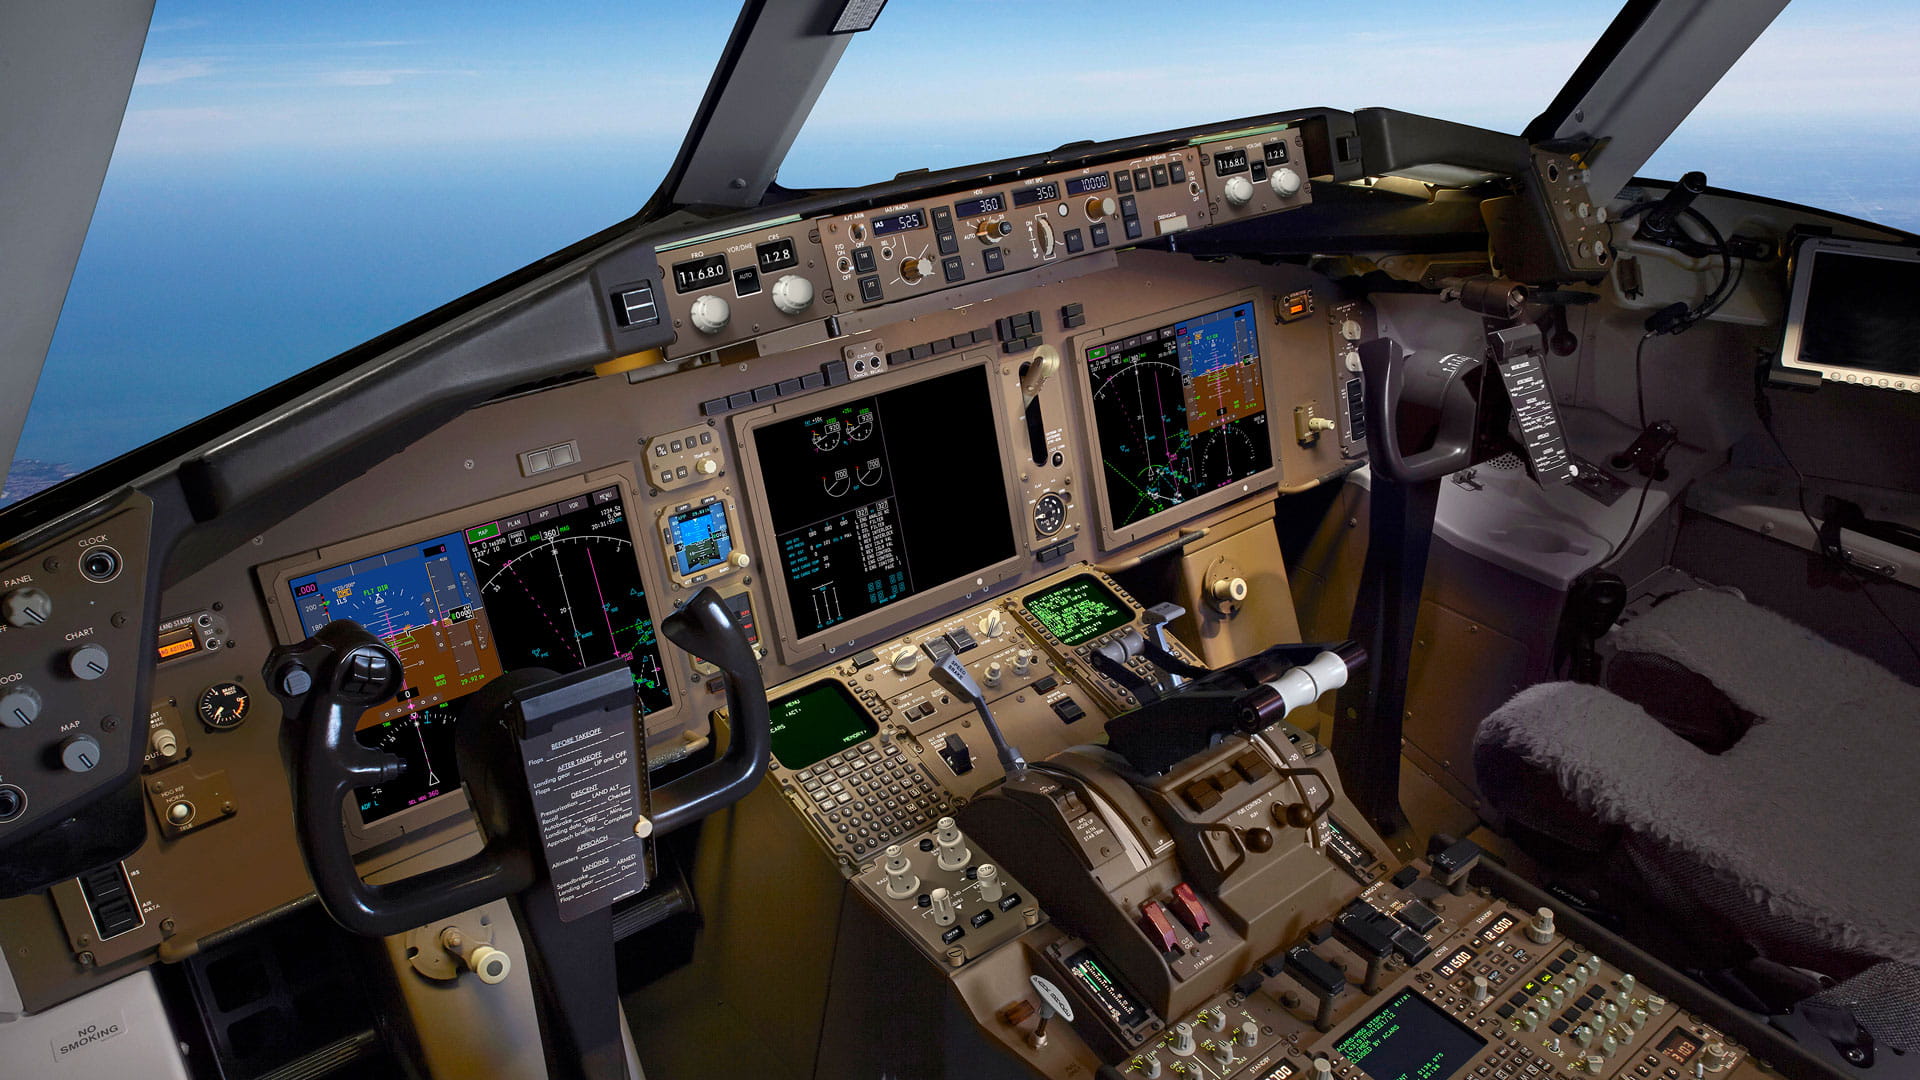 767 Large Display System Pilot angle